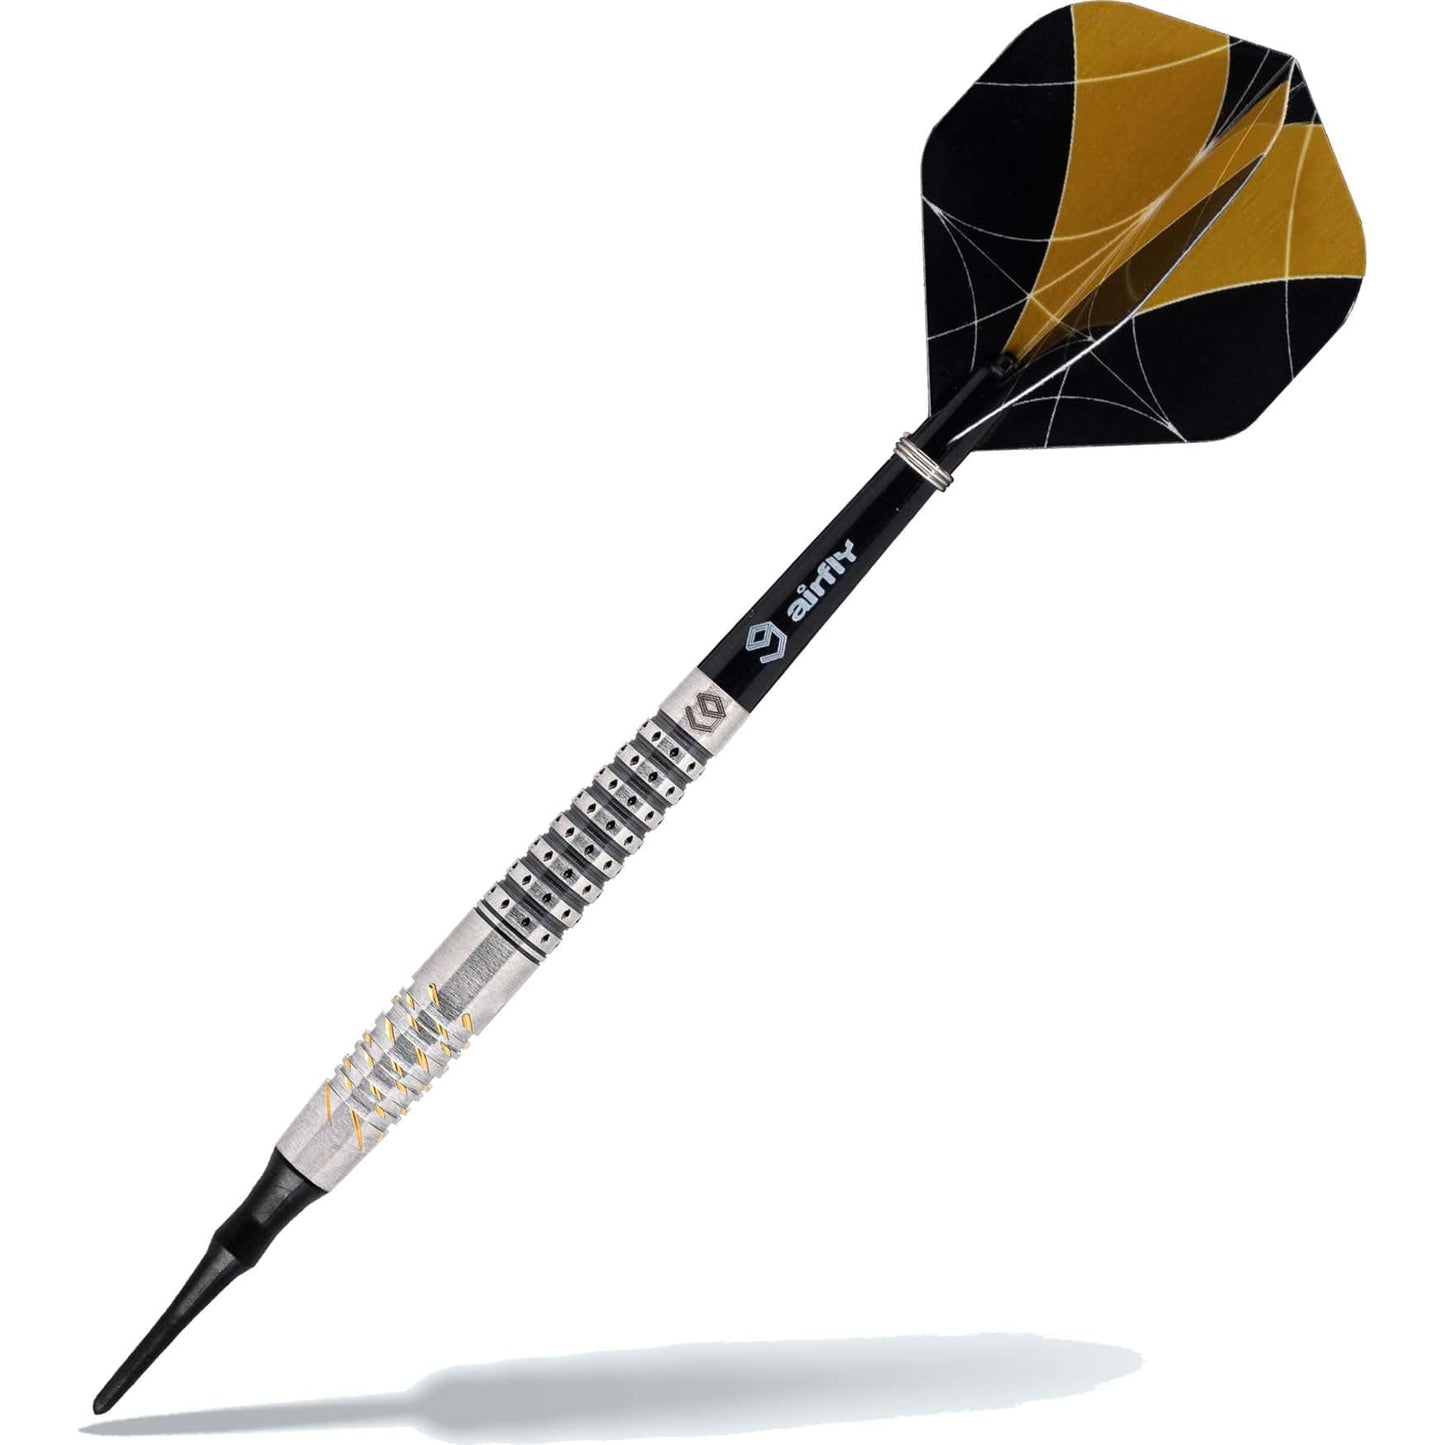 Caliburn Player Darts - Soft Tip - 90% - Silver & Gold - Han